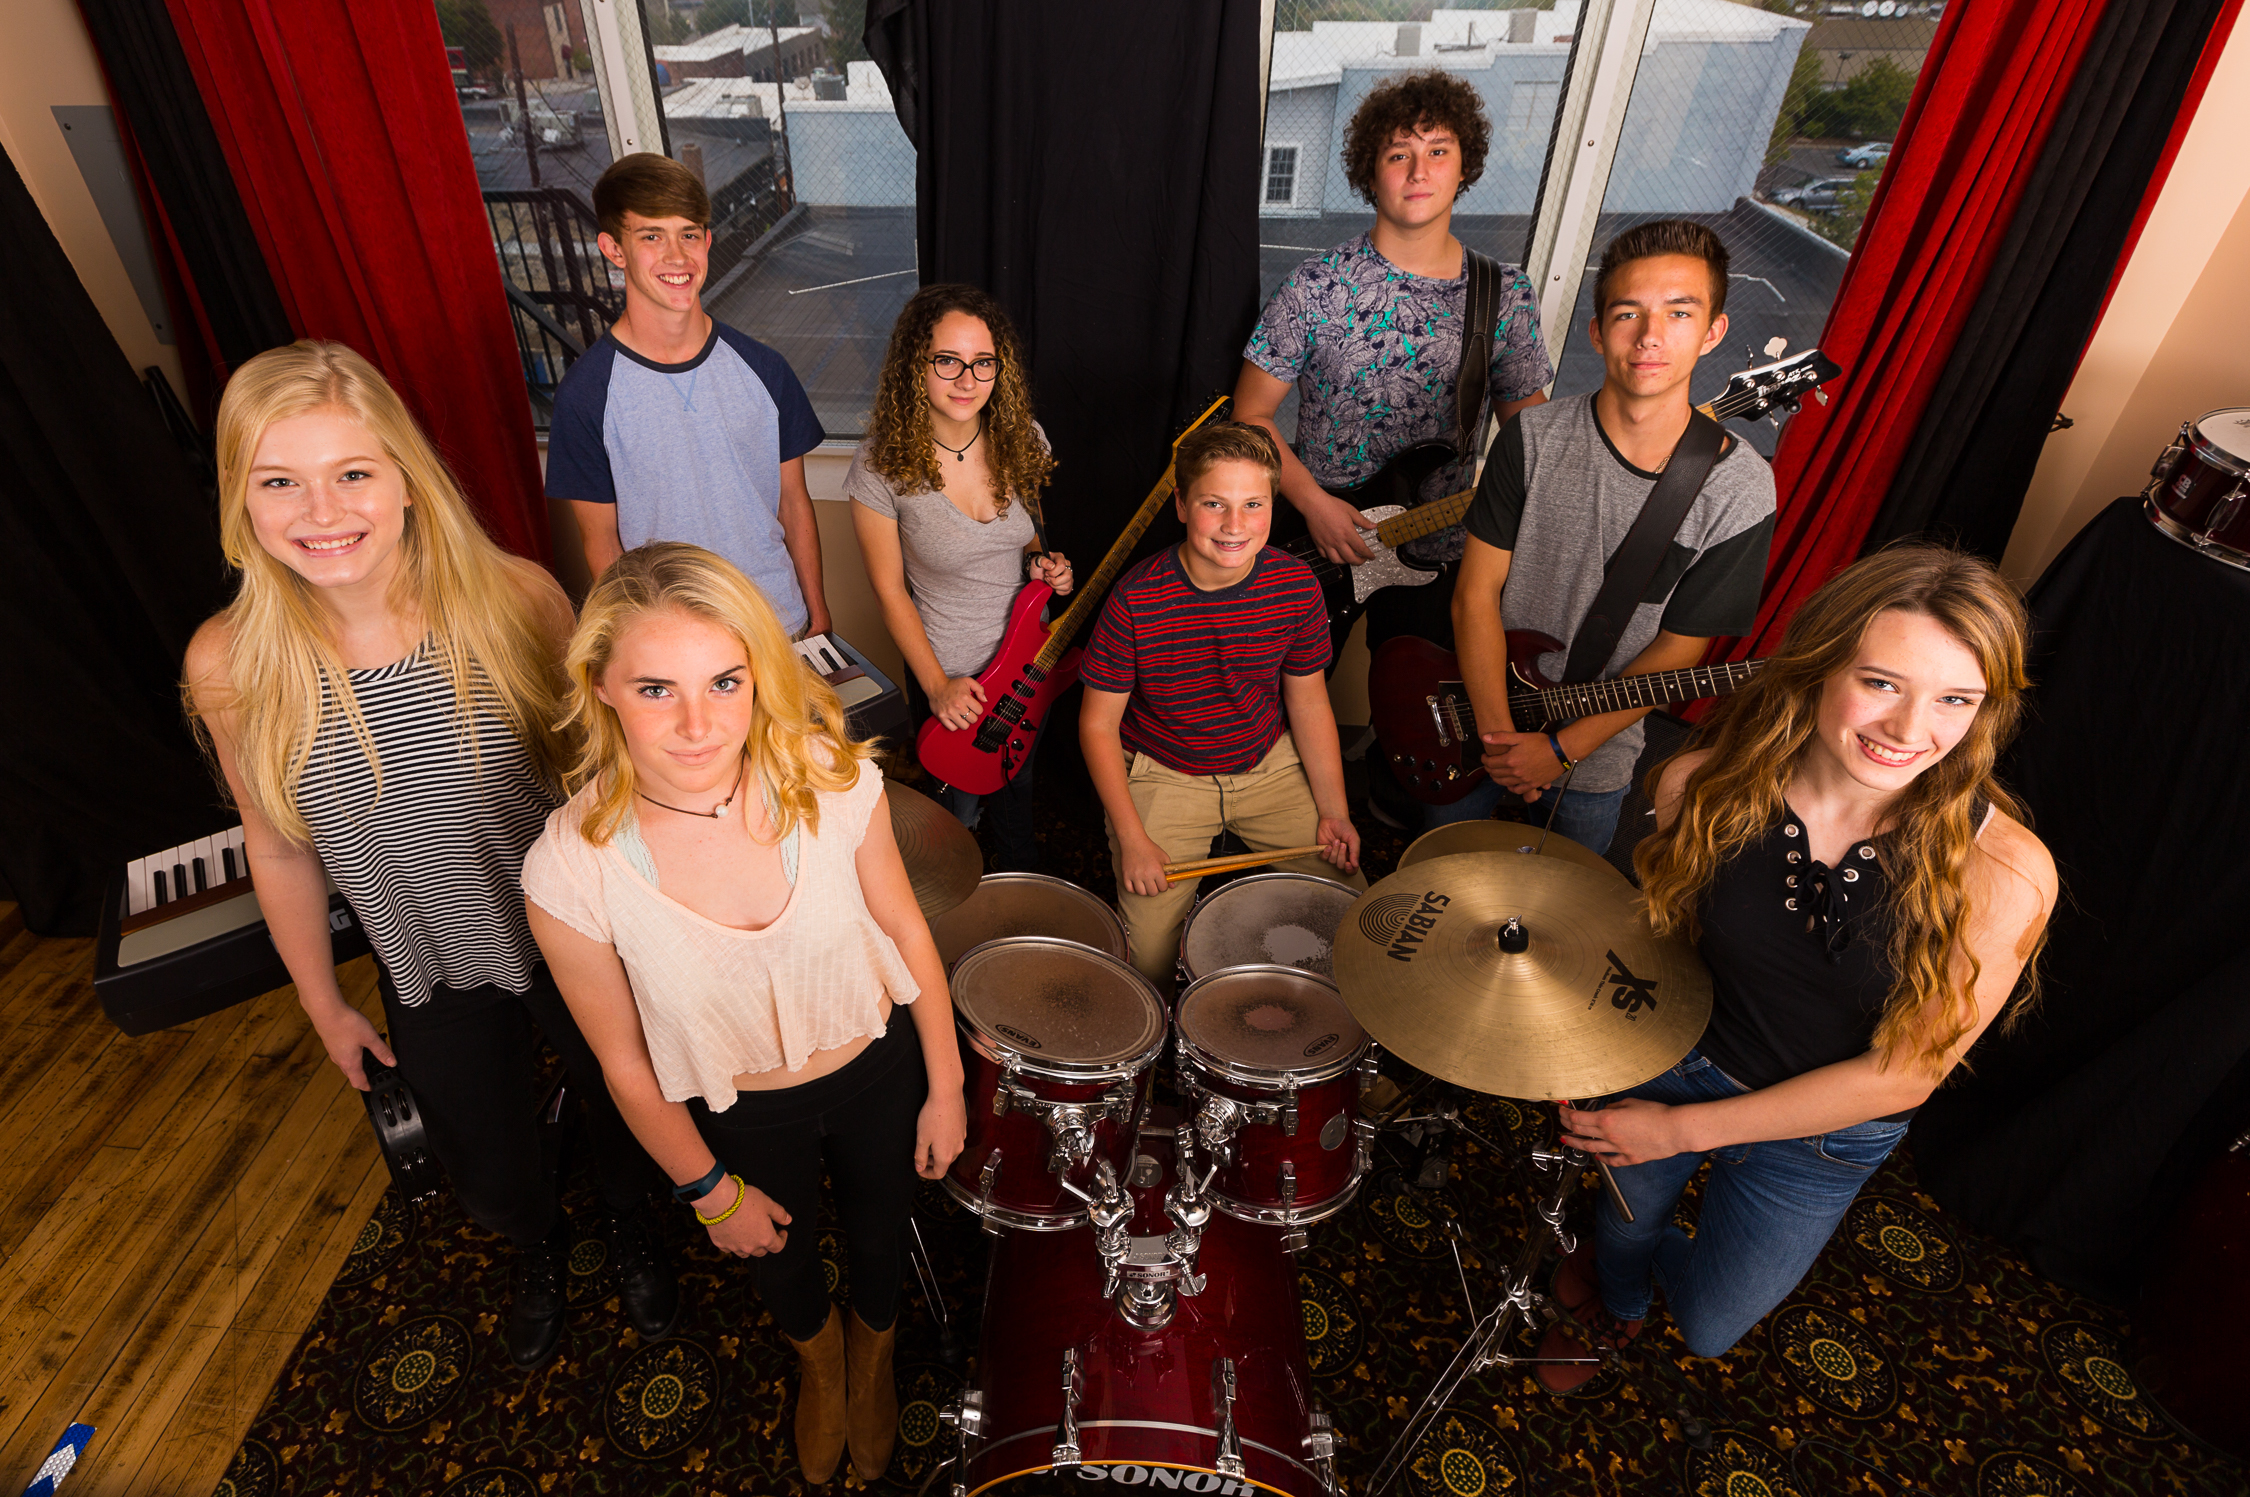 Asheville Music School Rock Band. Photo: Michael Oppenheim